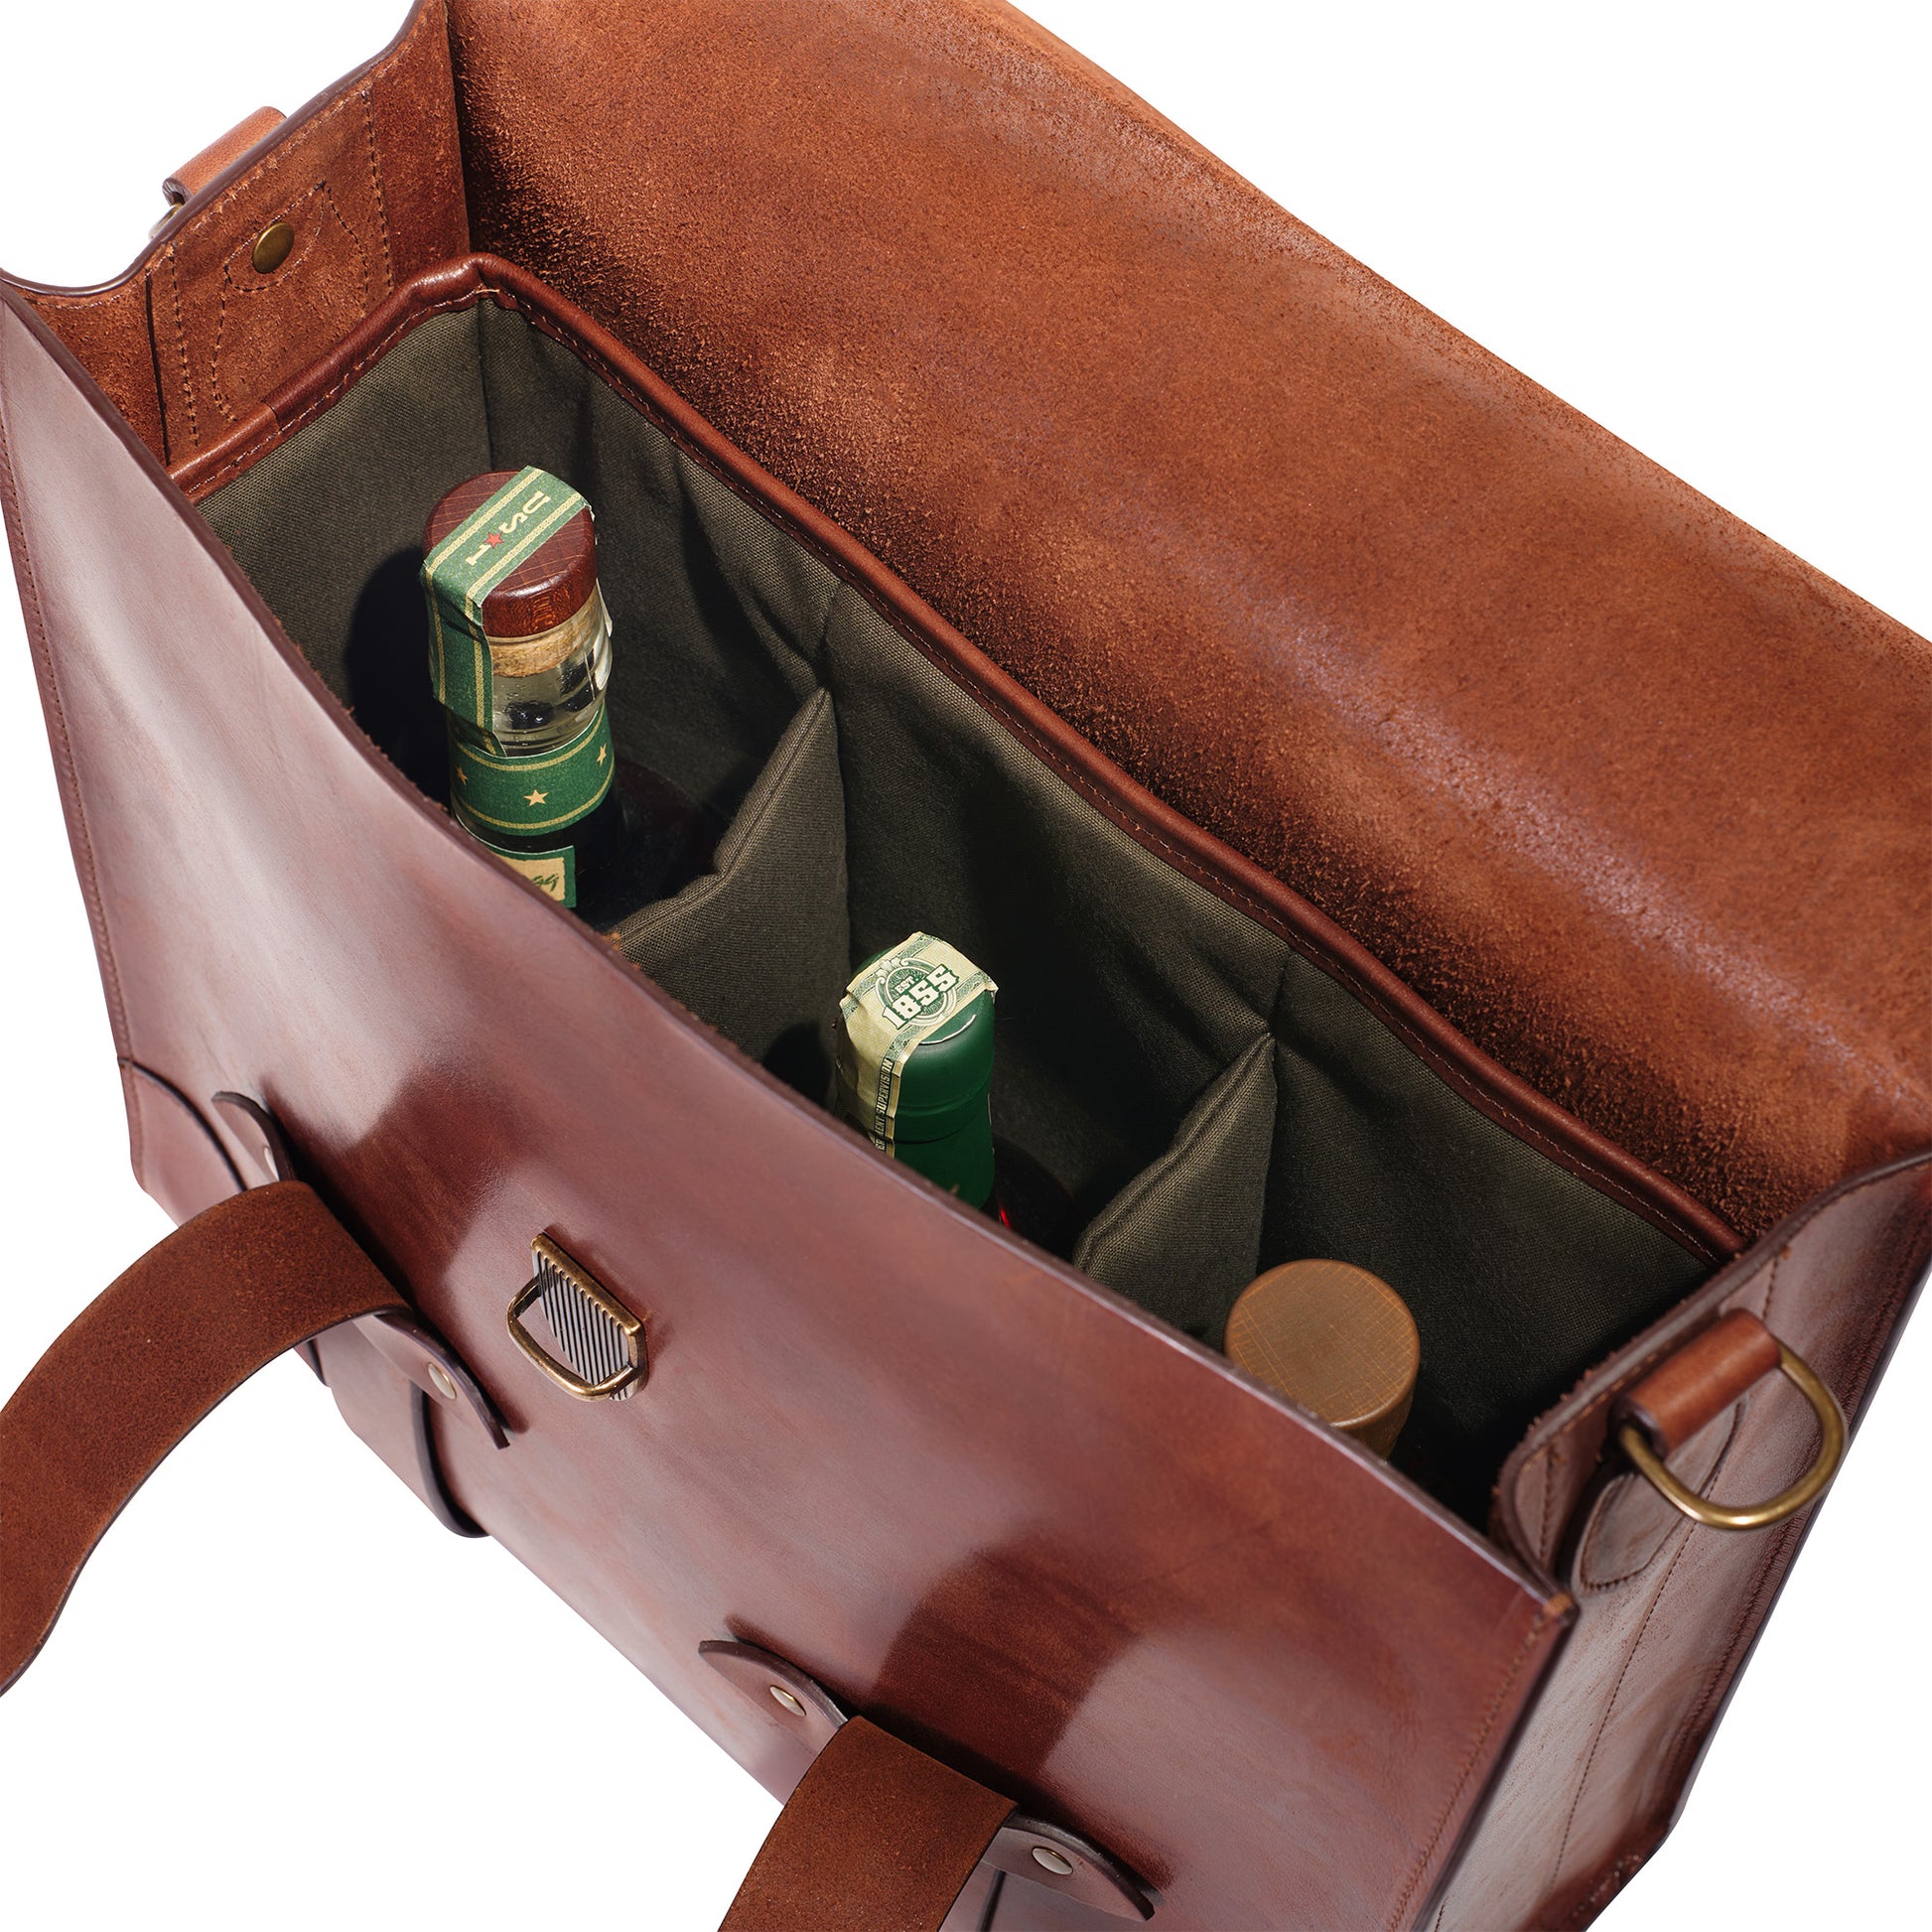 3 bottle holder bourbon bag by Jackson Wayne leather goods - pine green water repellent canvas 